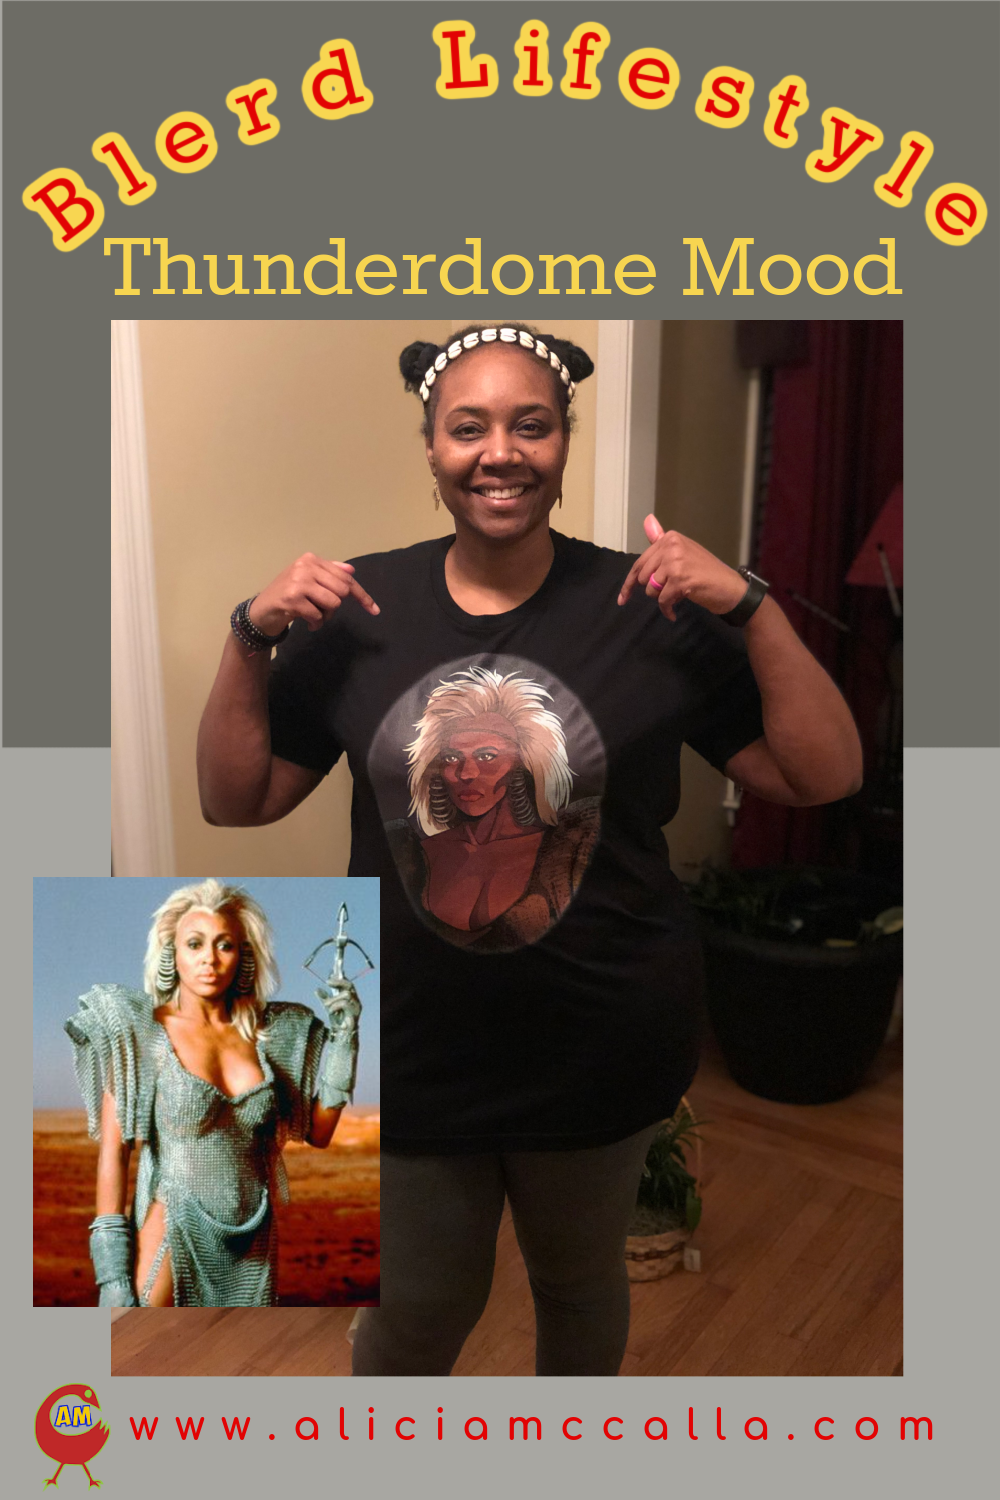 Blerd Lifestyle: My Thunderdome Mood